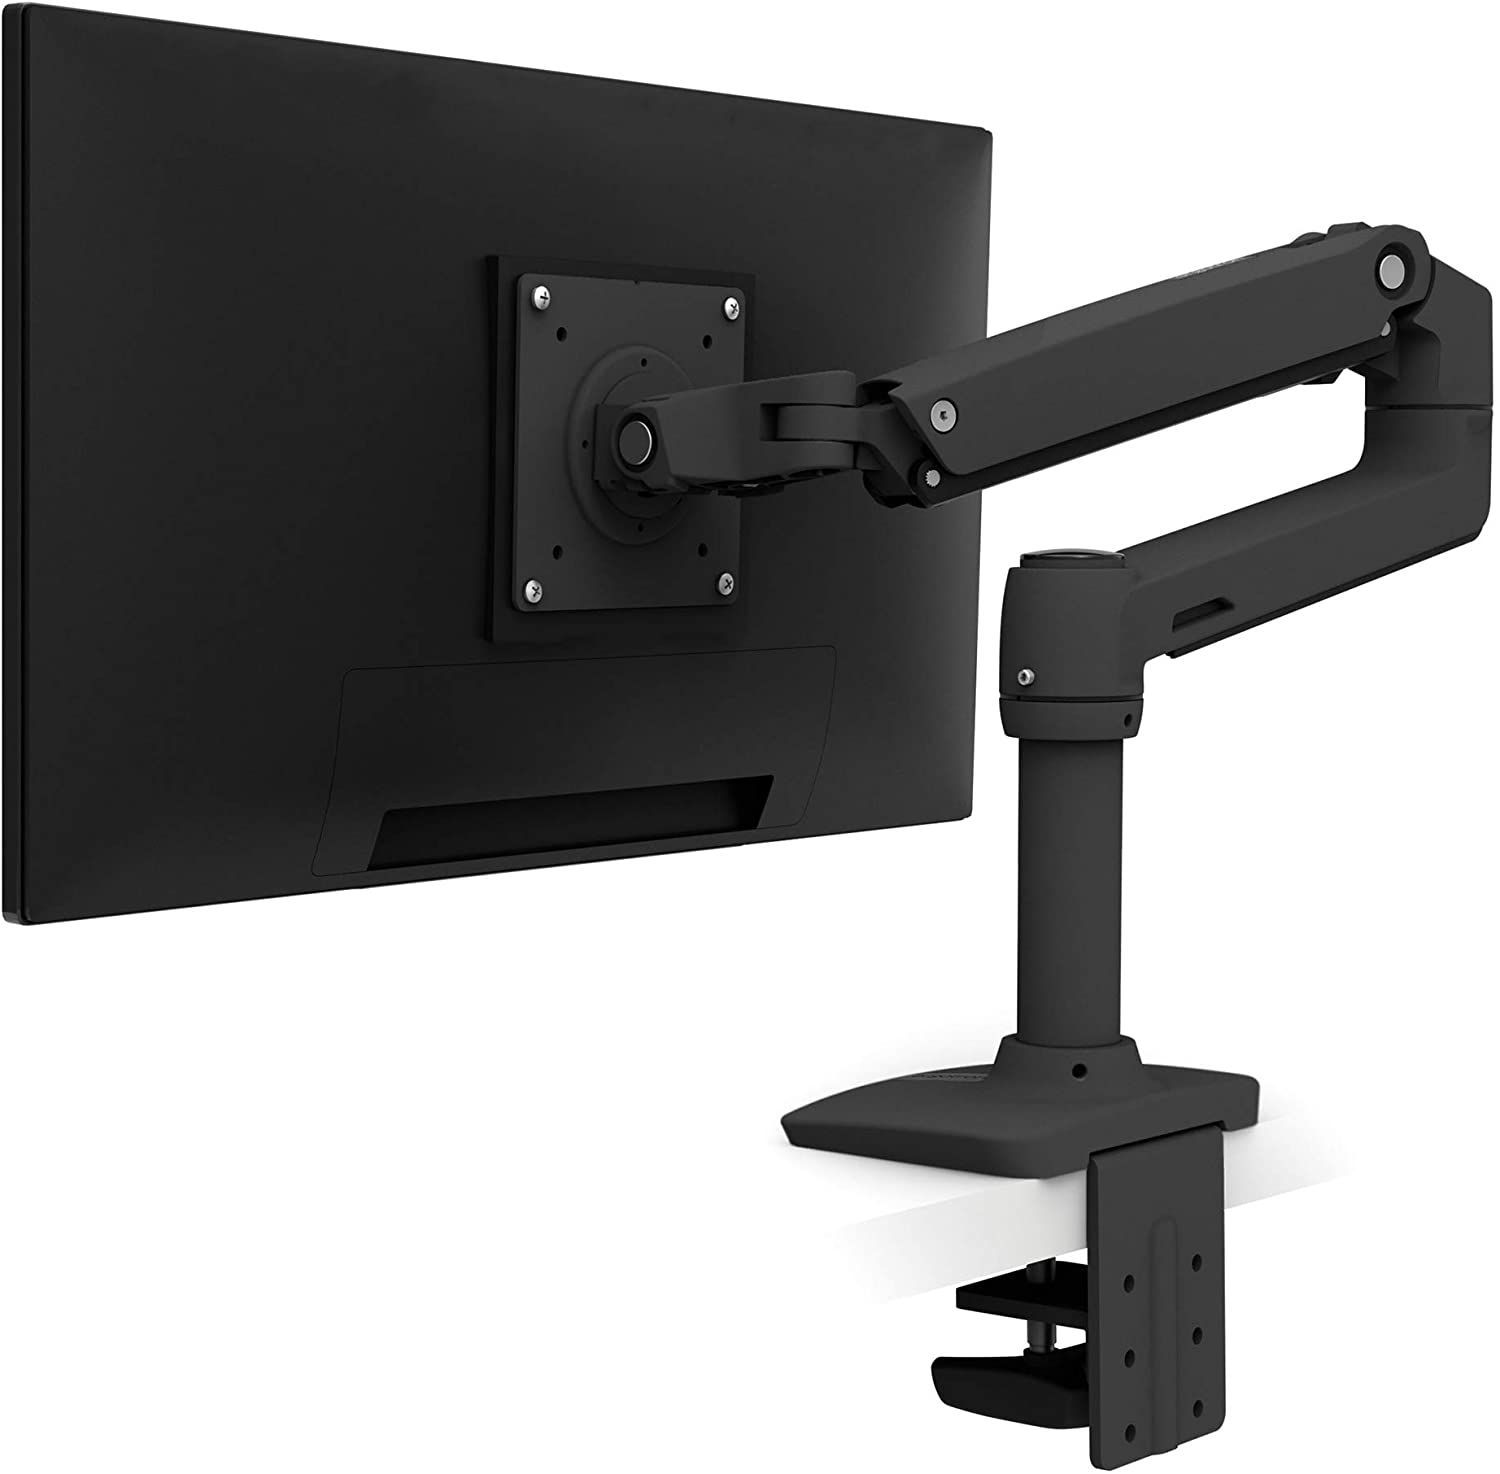 Ergotron LX Tall Desk Mount Monitor Arm